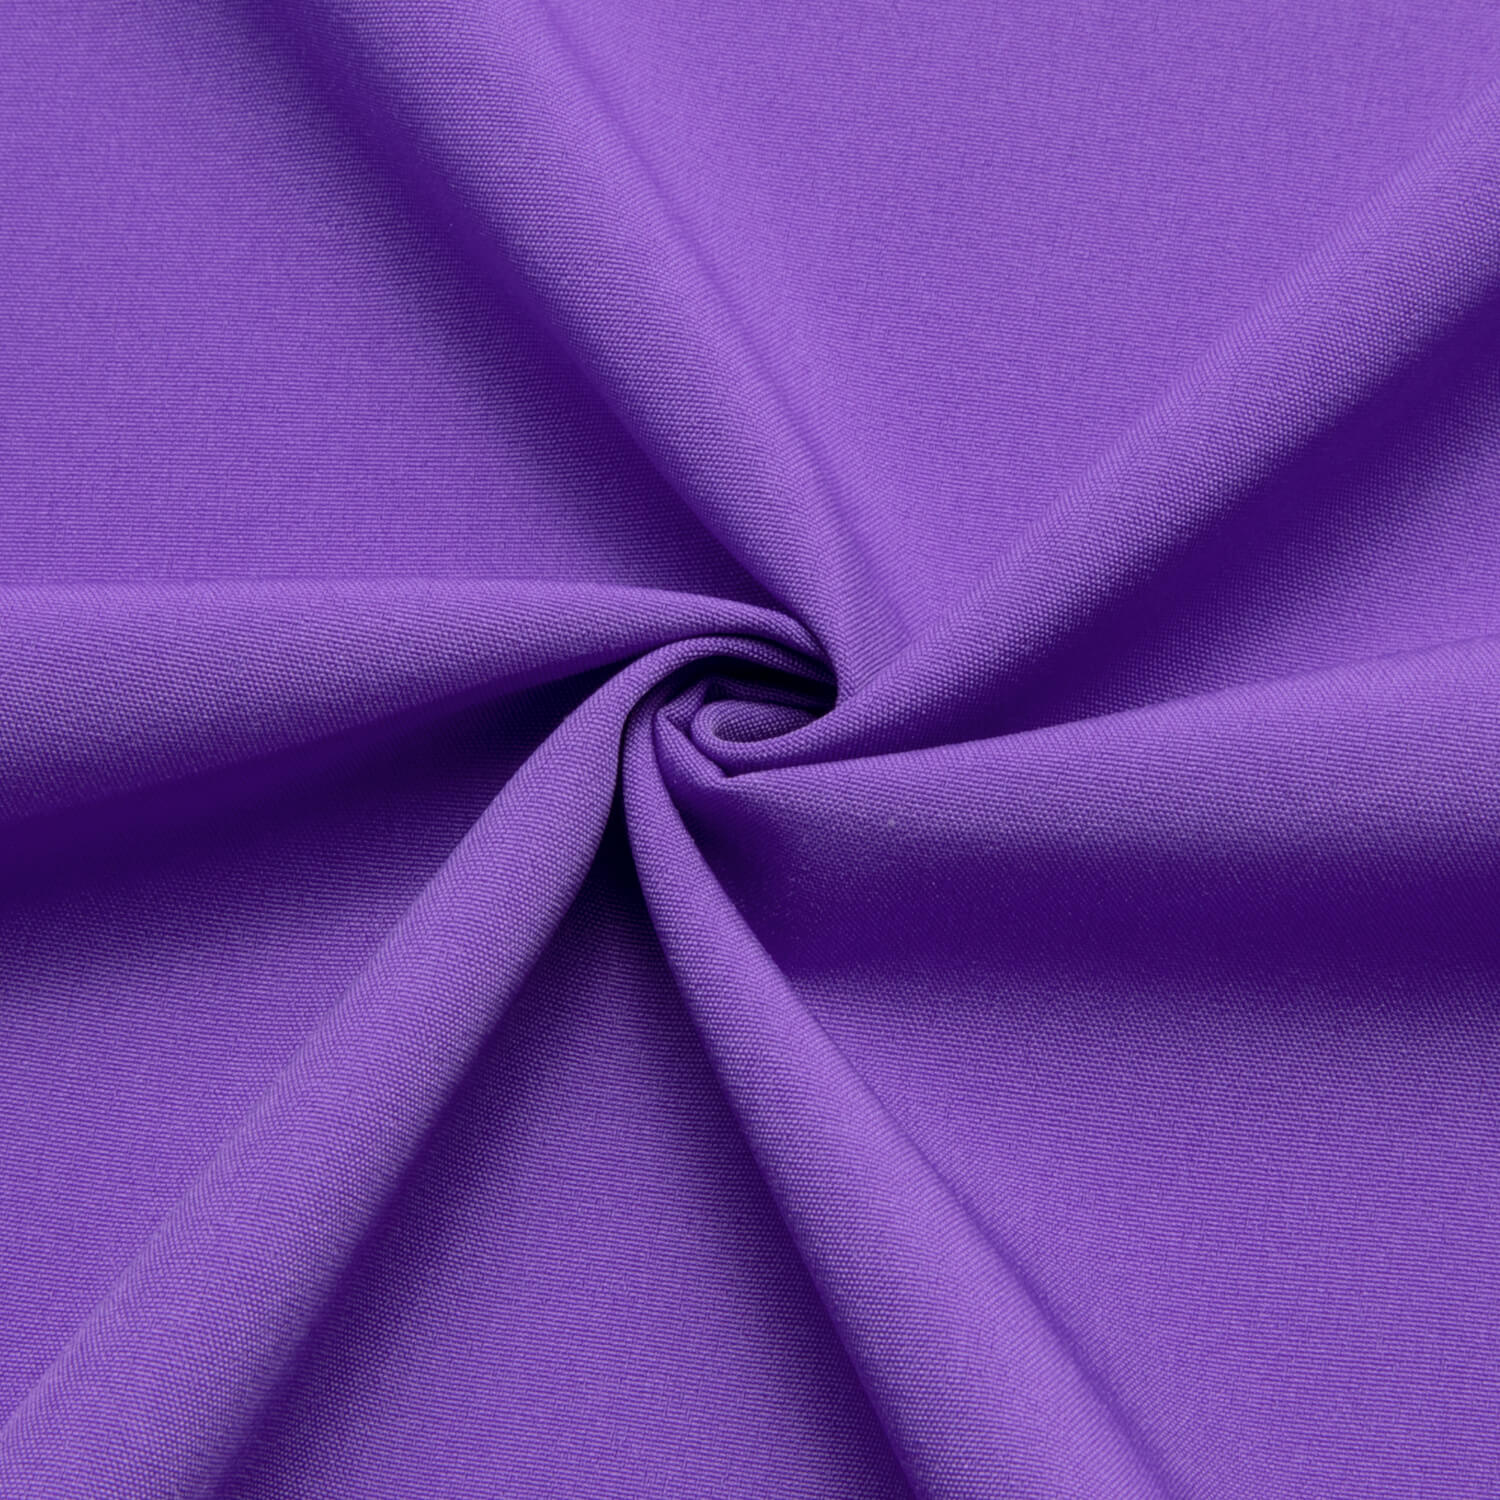 Hi-Tie Long Sleeve Shirt DarkVoilet Purple Solid Casual Men's Dress Shirt Top Wear